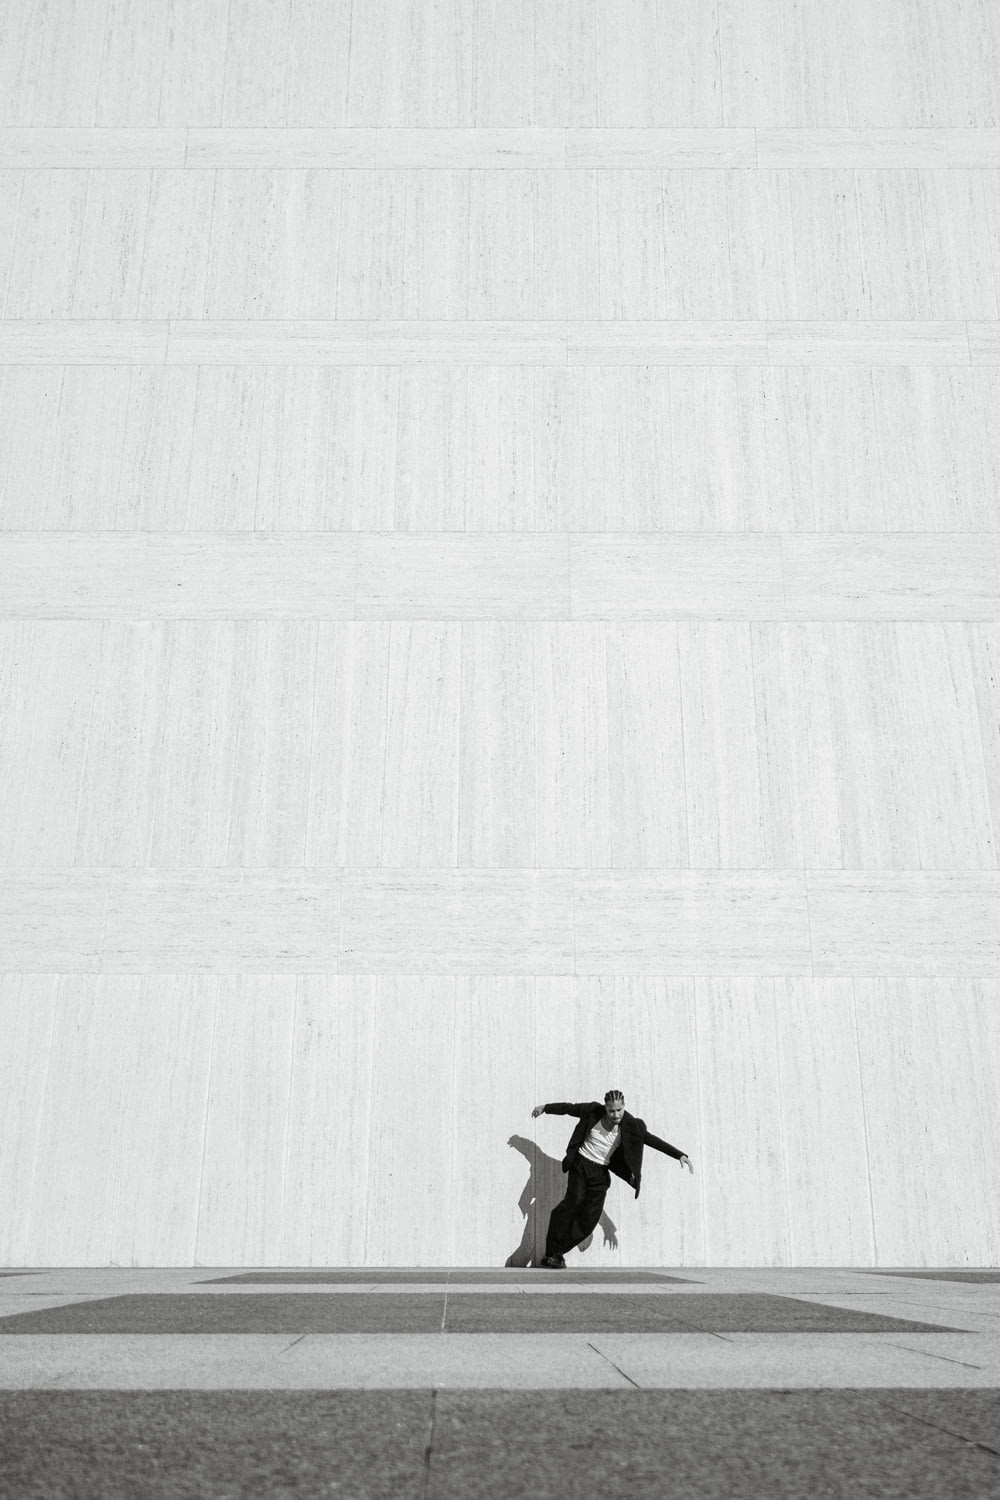 a man riding a skateboard across a cement floor